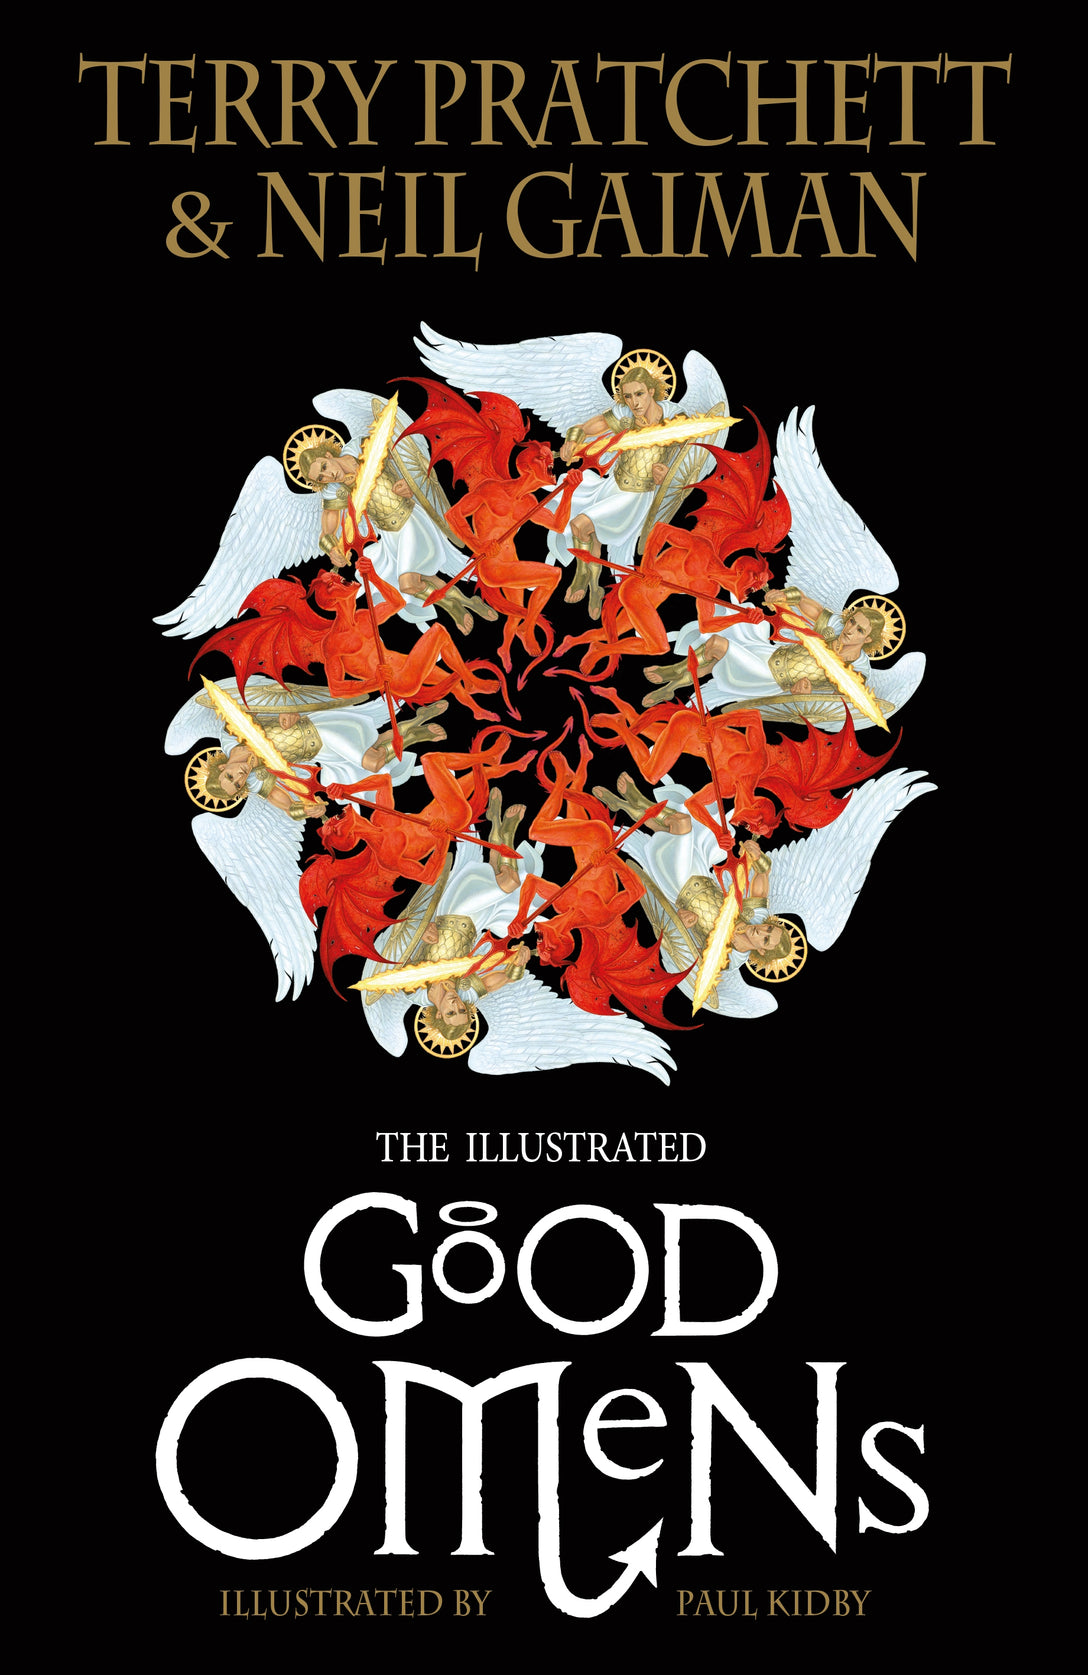 The Illustrated Good Omens by Paul Kidby, Neil Gaiman, Terry Pratchett